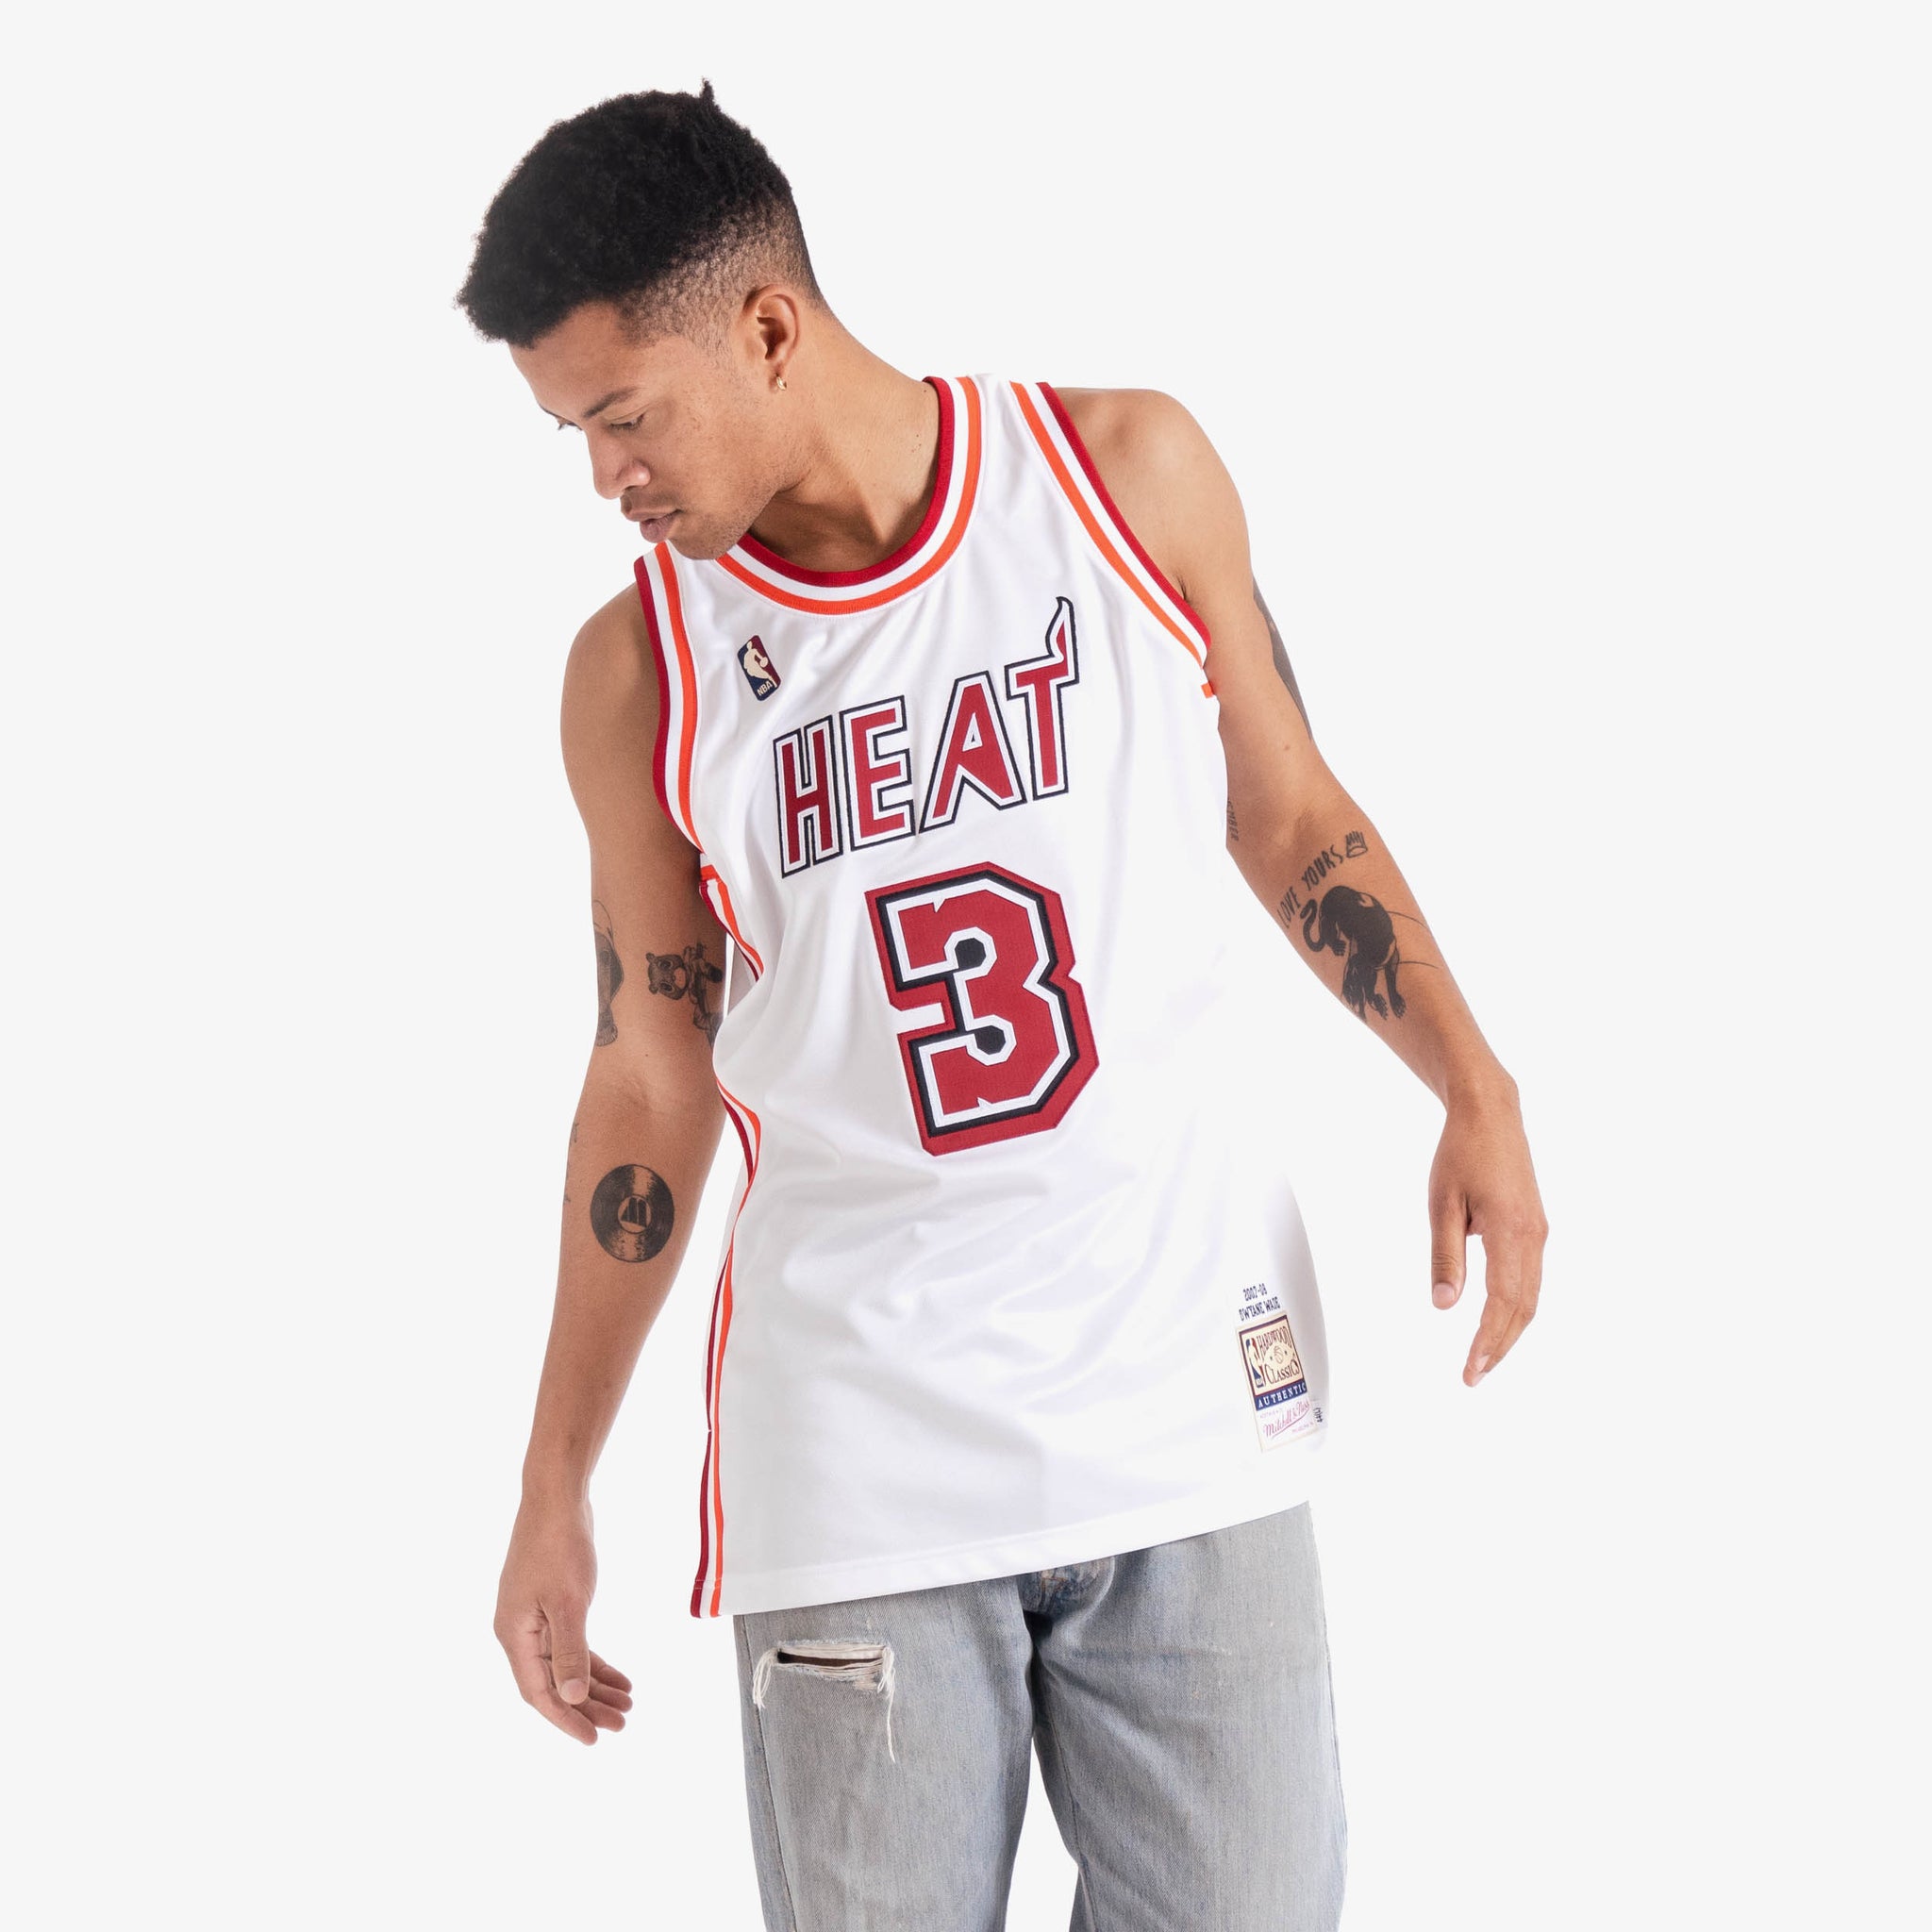 Vintage Miami Heat Jersey Size: L Condition: 8/10 Price: R350